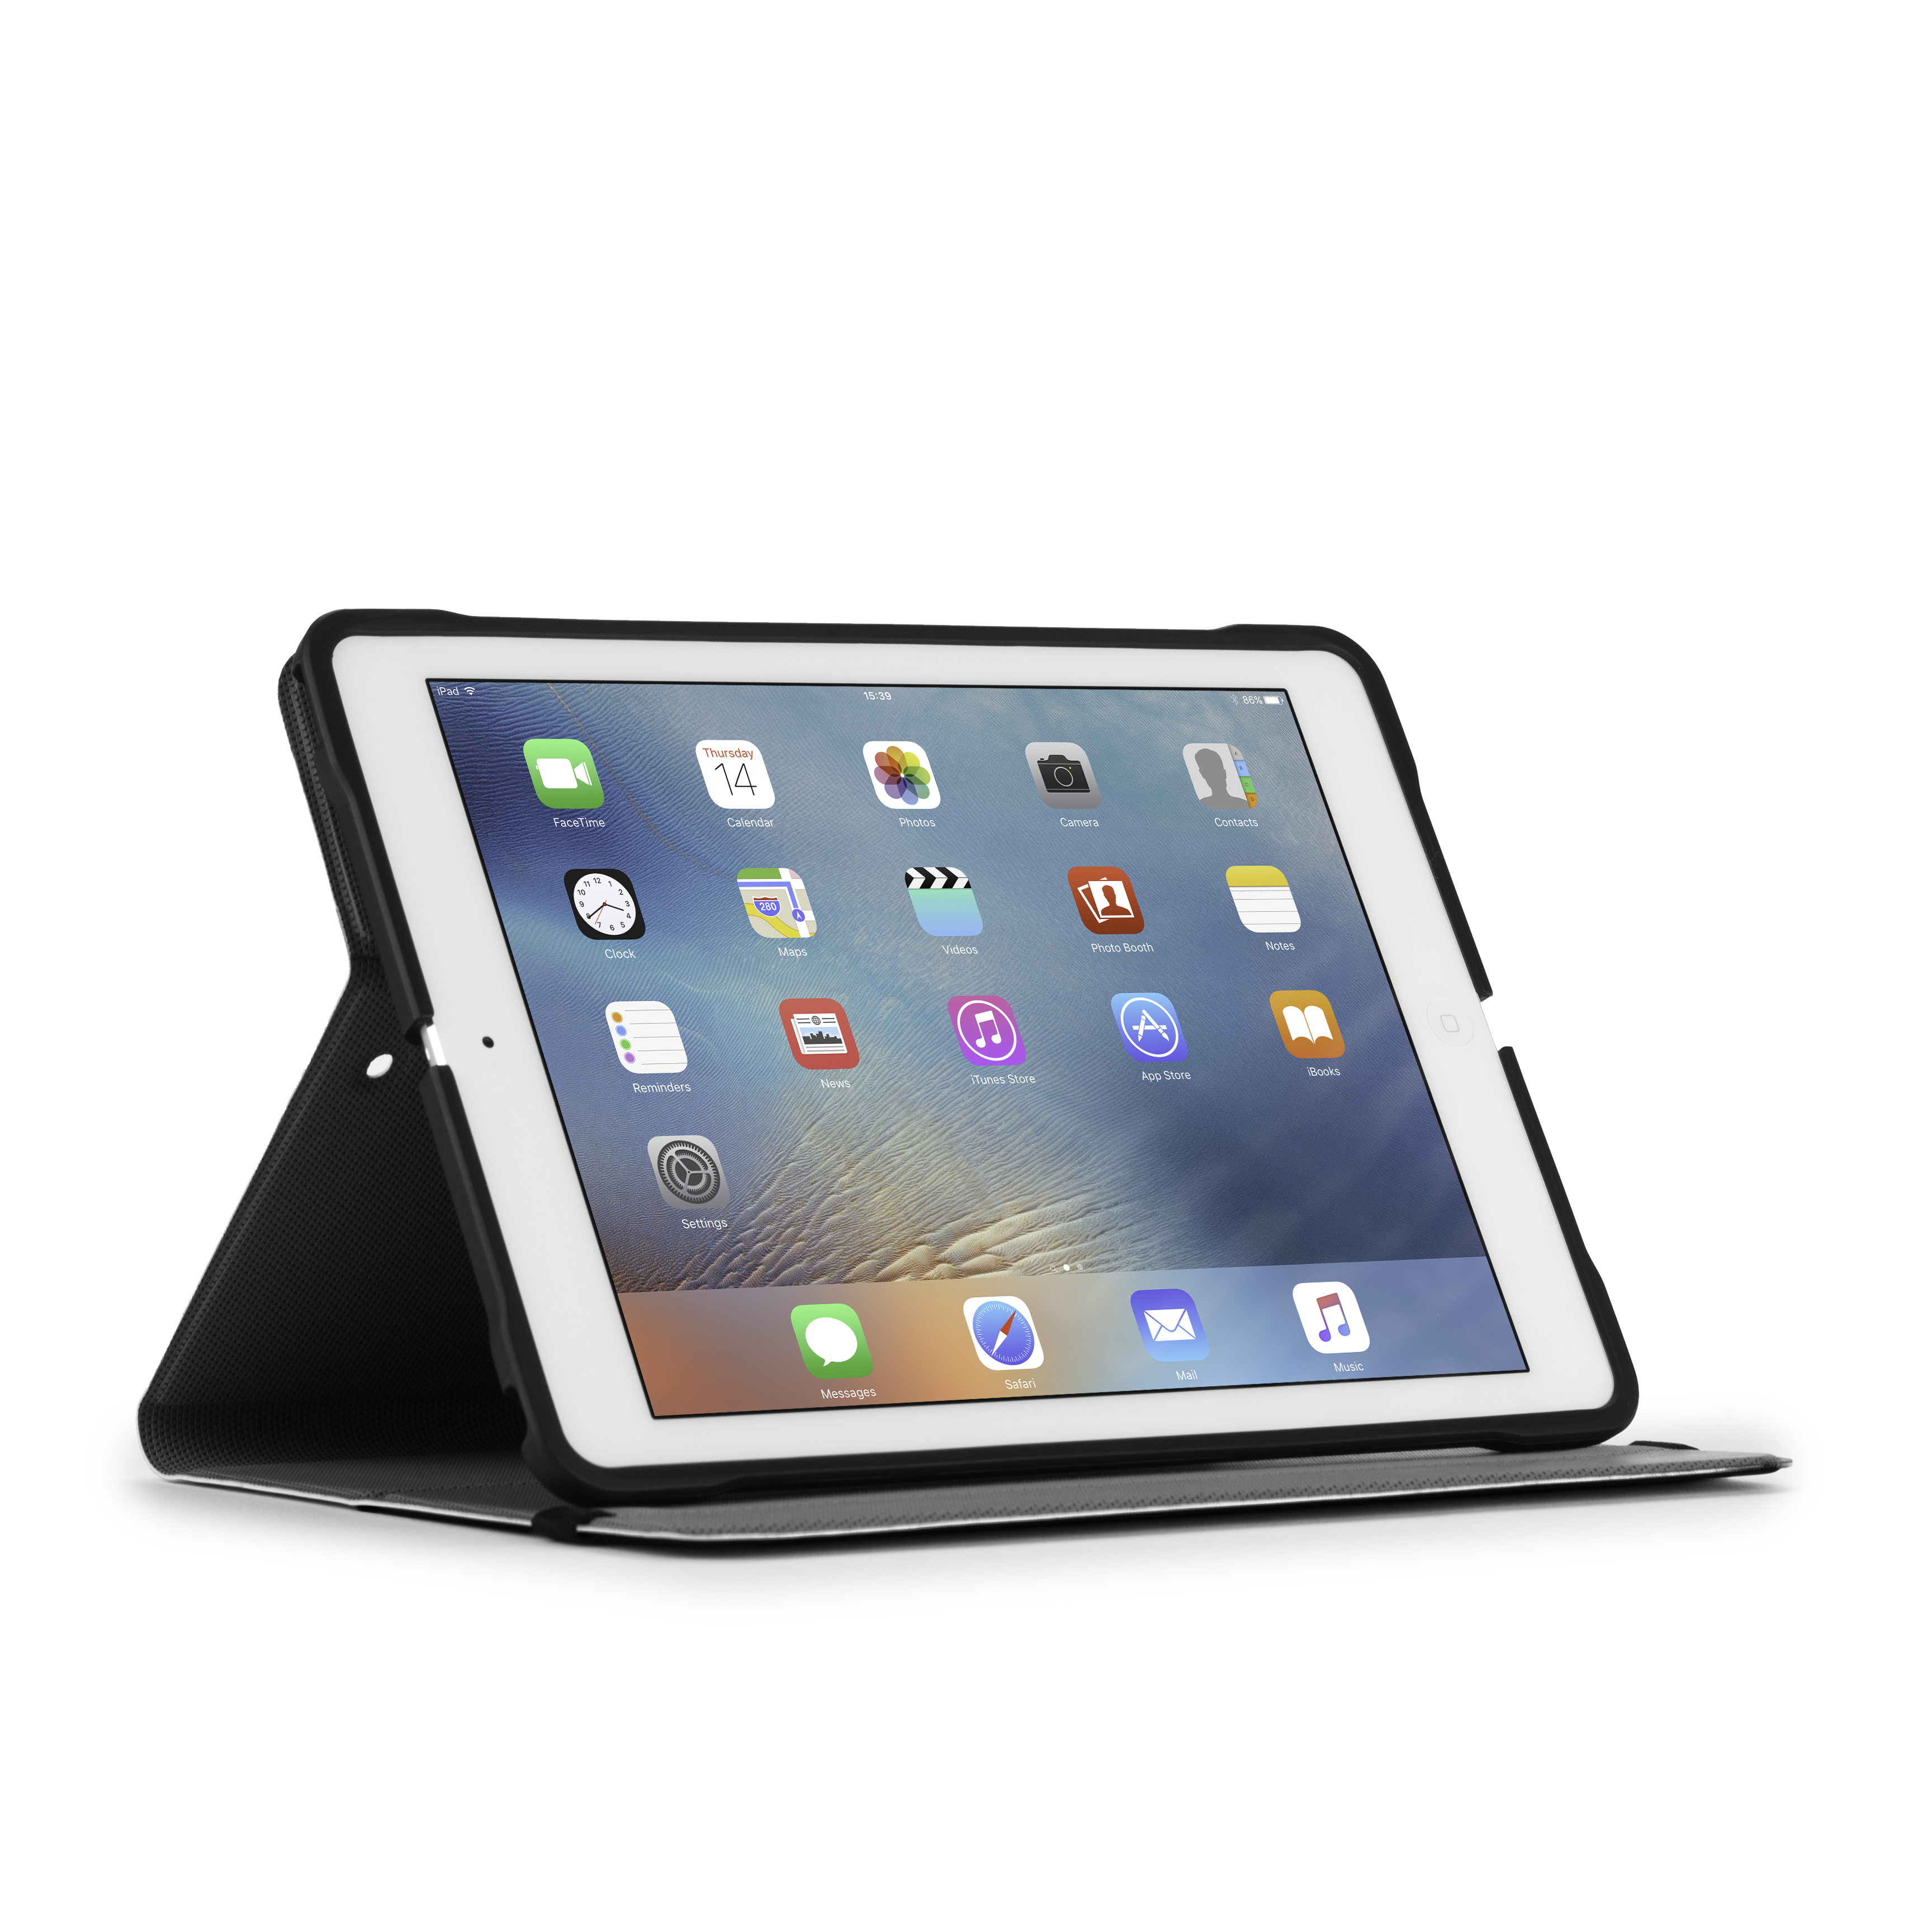 iPad Air Smart Cover Louis Vuitton iPad Pro Case iPad Air 2 Case inspired  by Louis Vuitton tablet ca